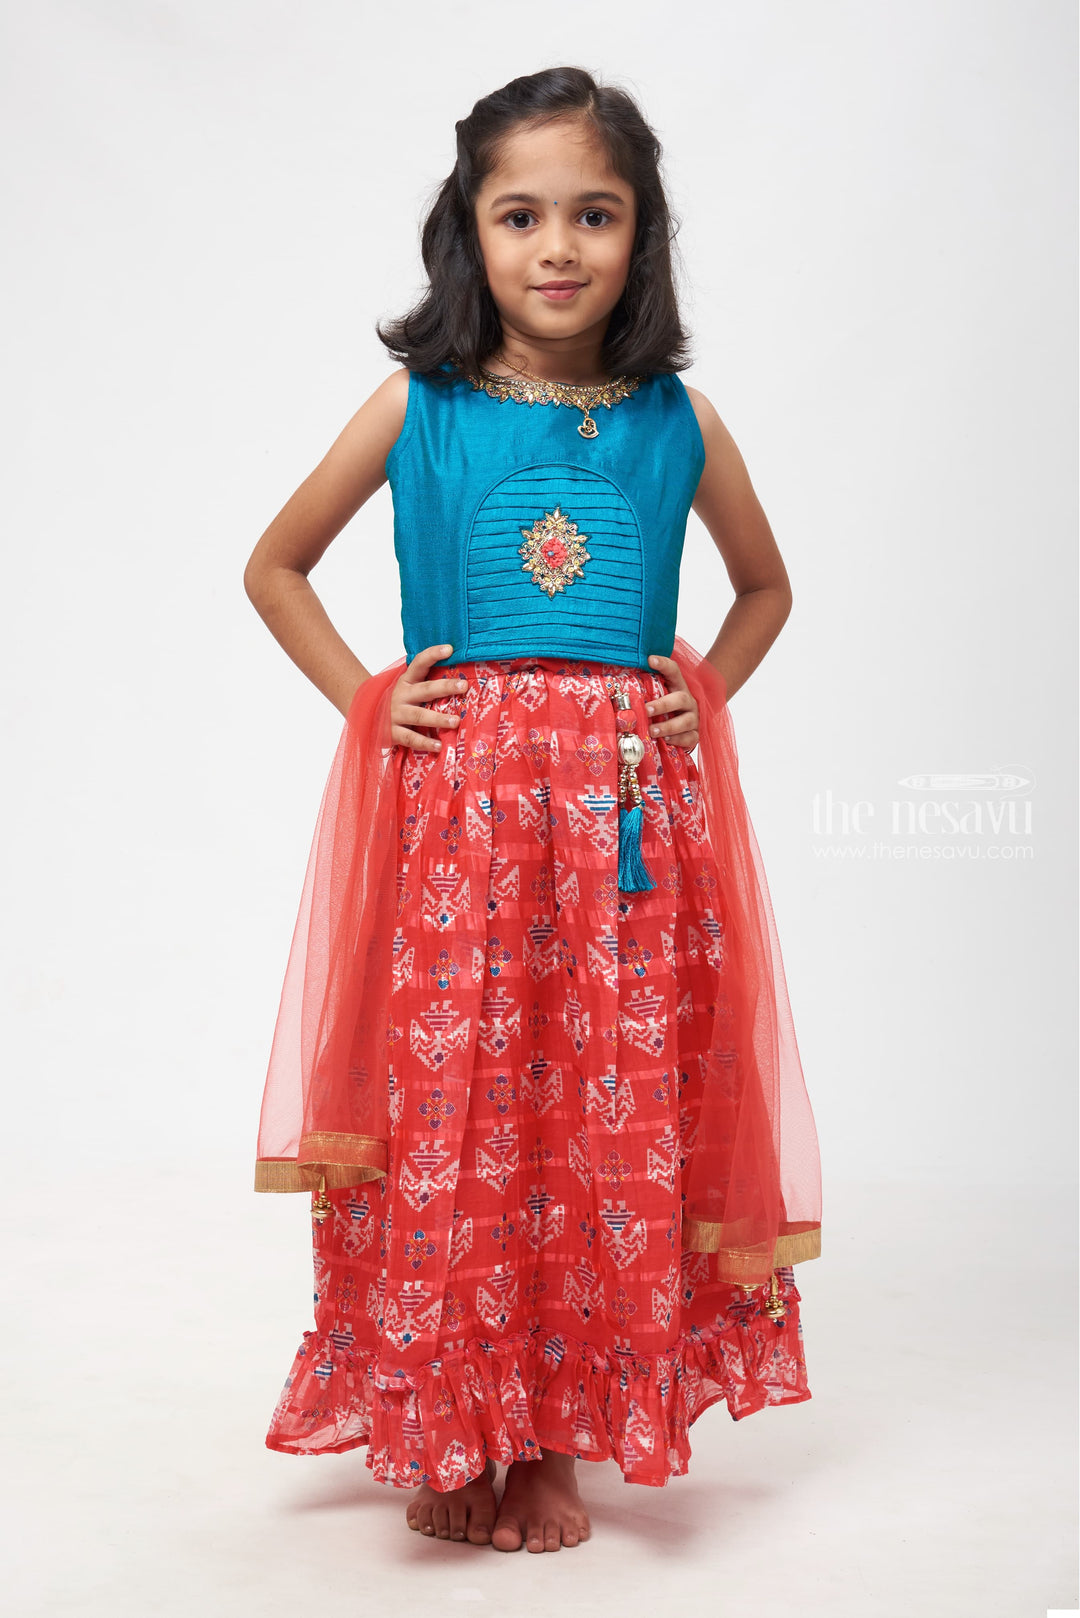 The Nesavu Girls Lehenga Choli Teal Embellished Crop Top & Traditional Pink Printed Lehenga Set Nesavu 16 (1Y) / Pink / Georgette GL374A-16 Kids Festive Lehenga Outfit | Little Girls Lehenga Suit for Diwali | The Nesavu